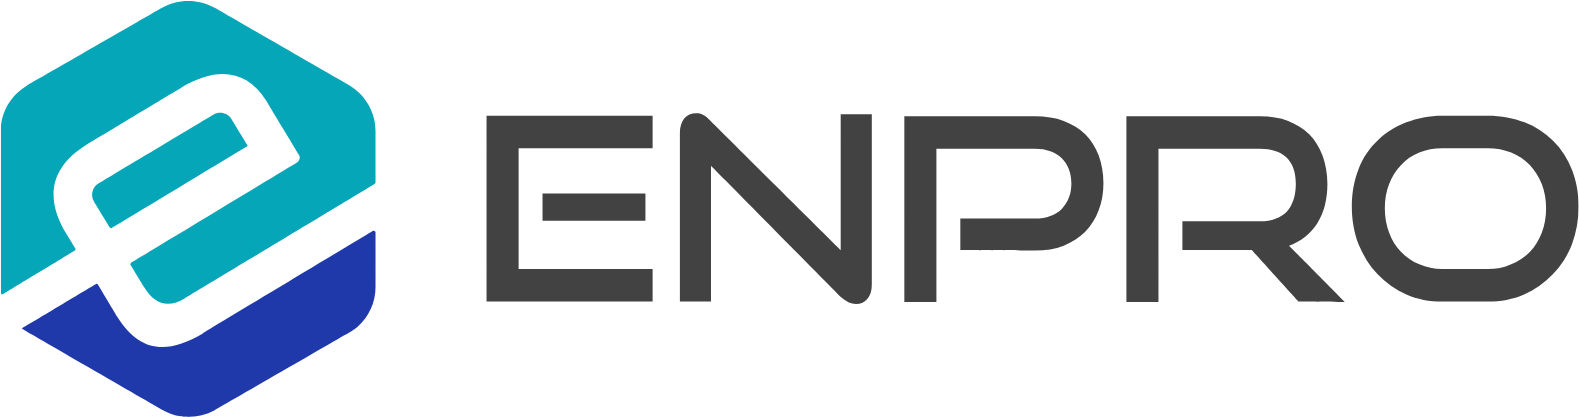 EnPro Industries
 logo large (transparent PNG)